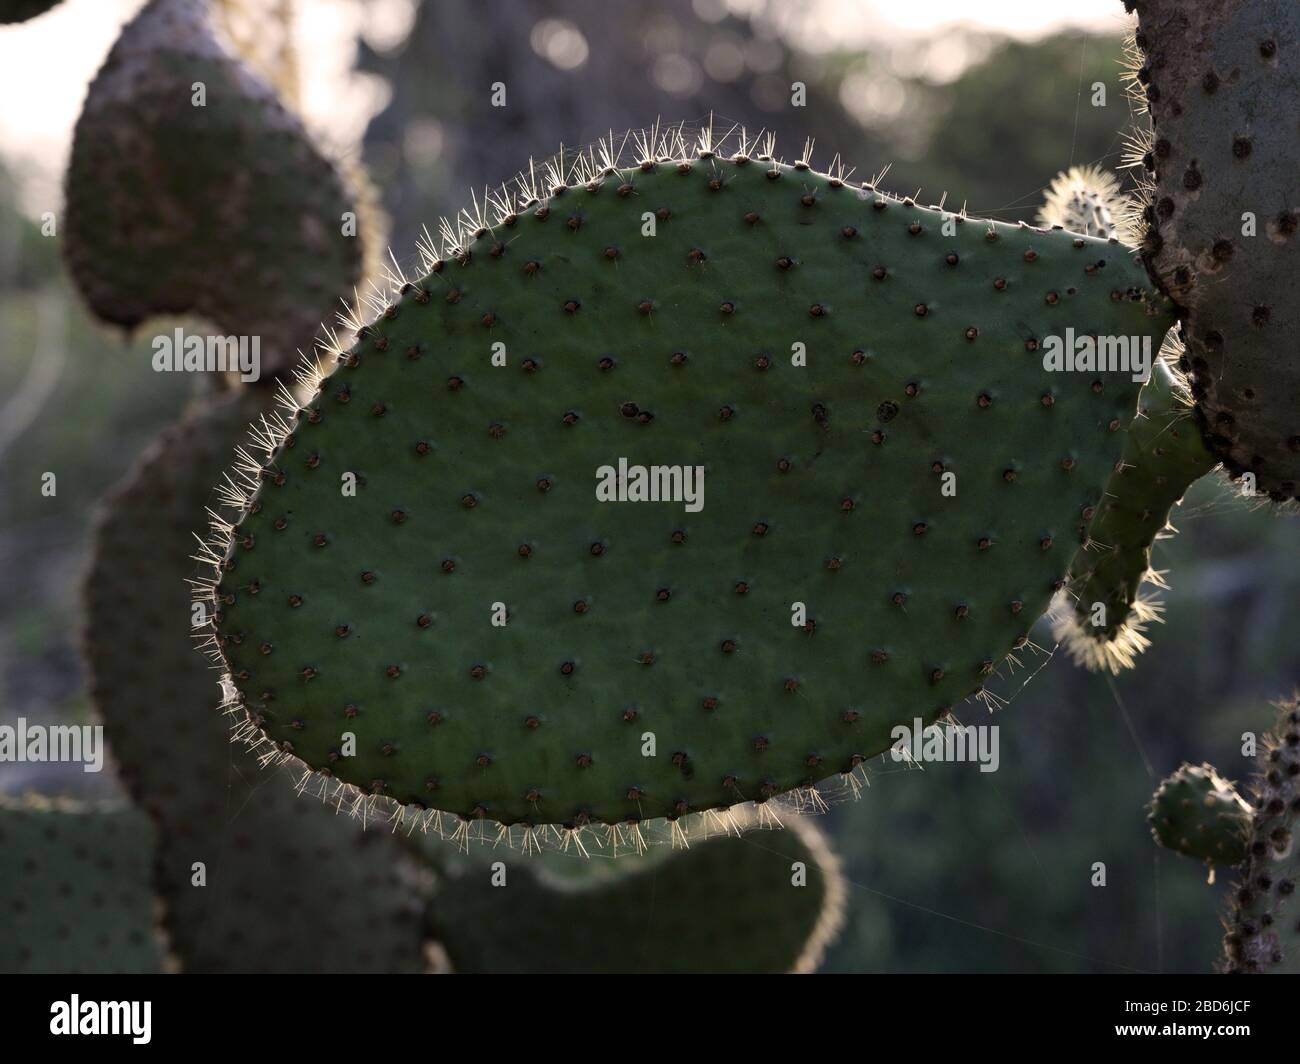 Cactus gigante de pera espinosa Opuntia echios gigantea Foto de stock